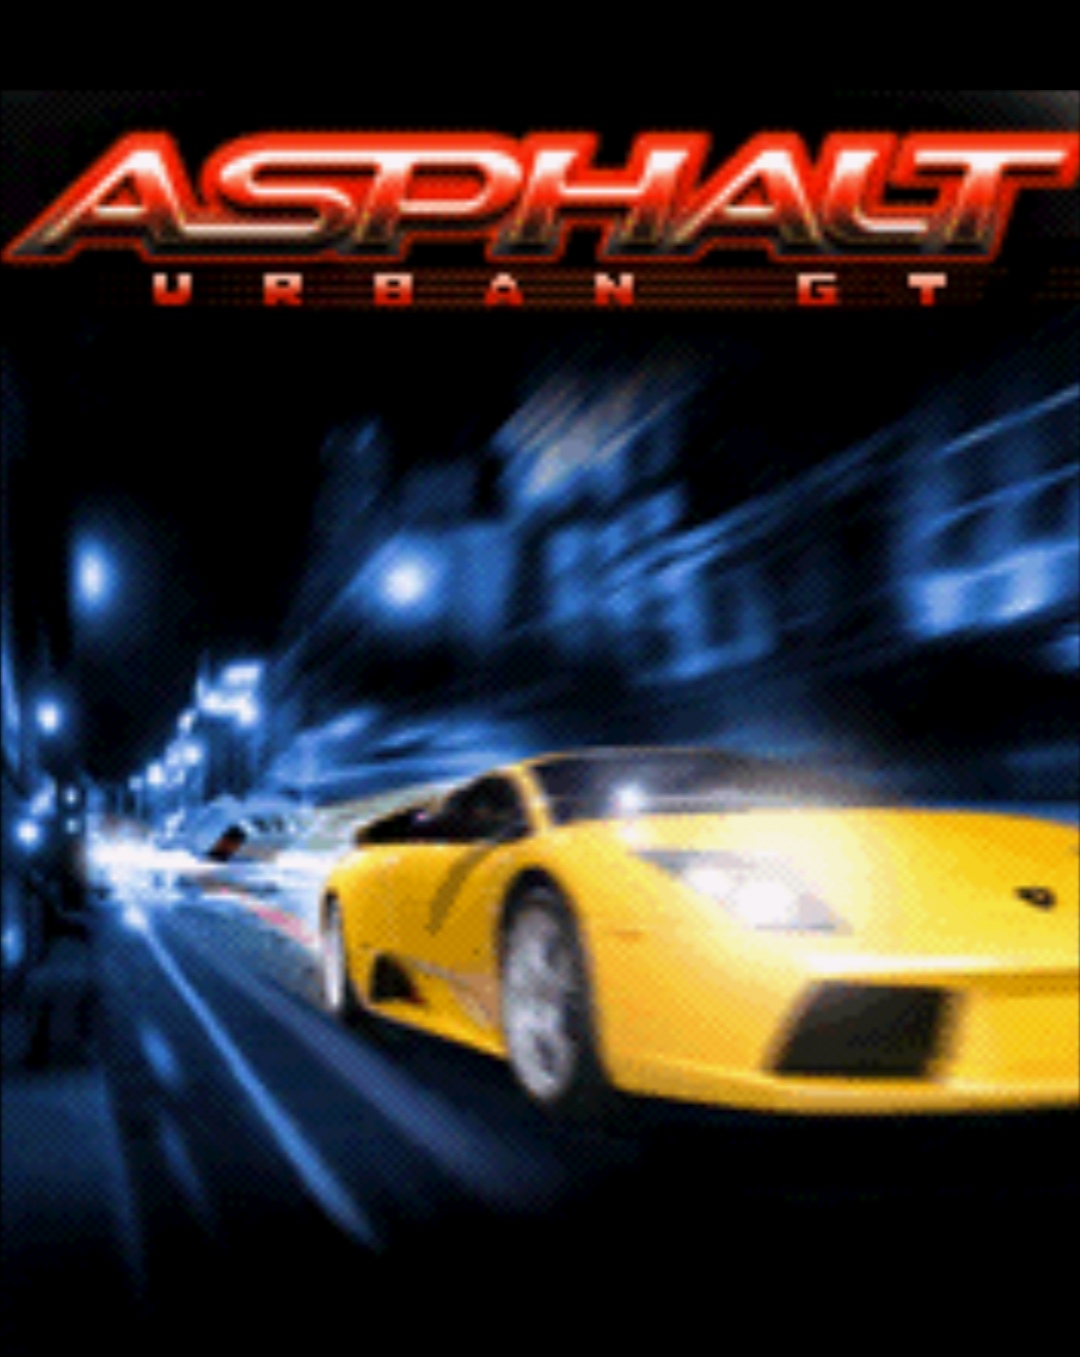 Asphalt 3D - IGN